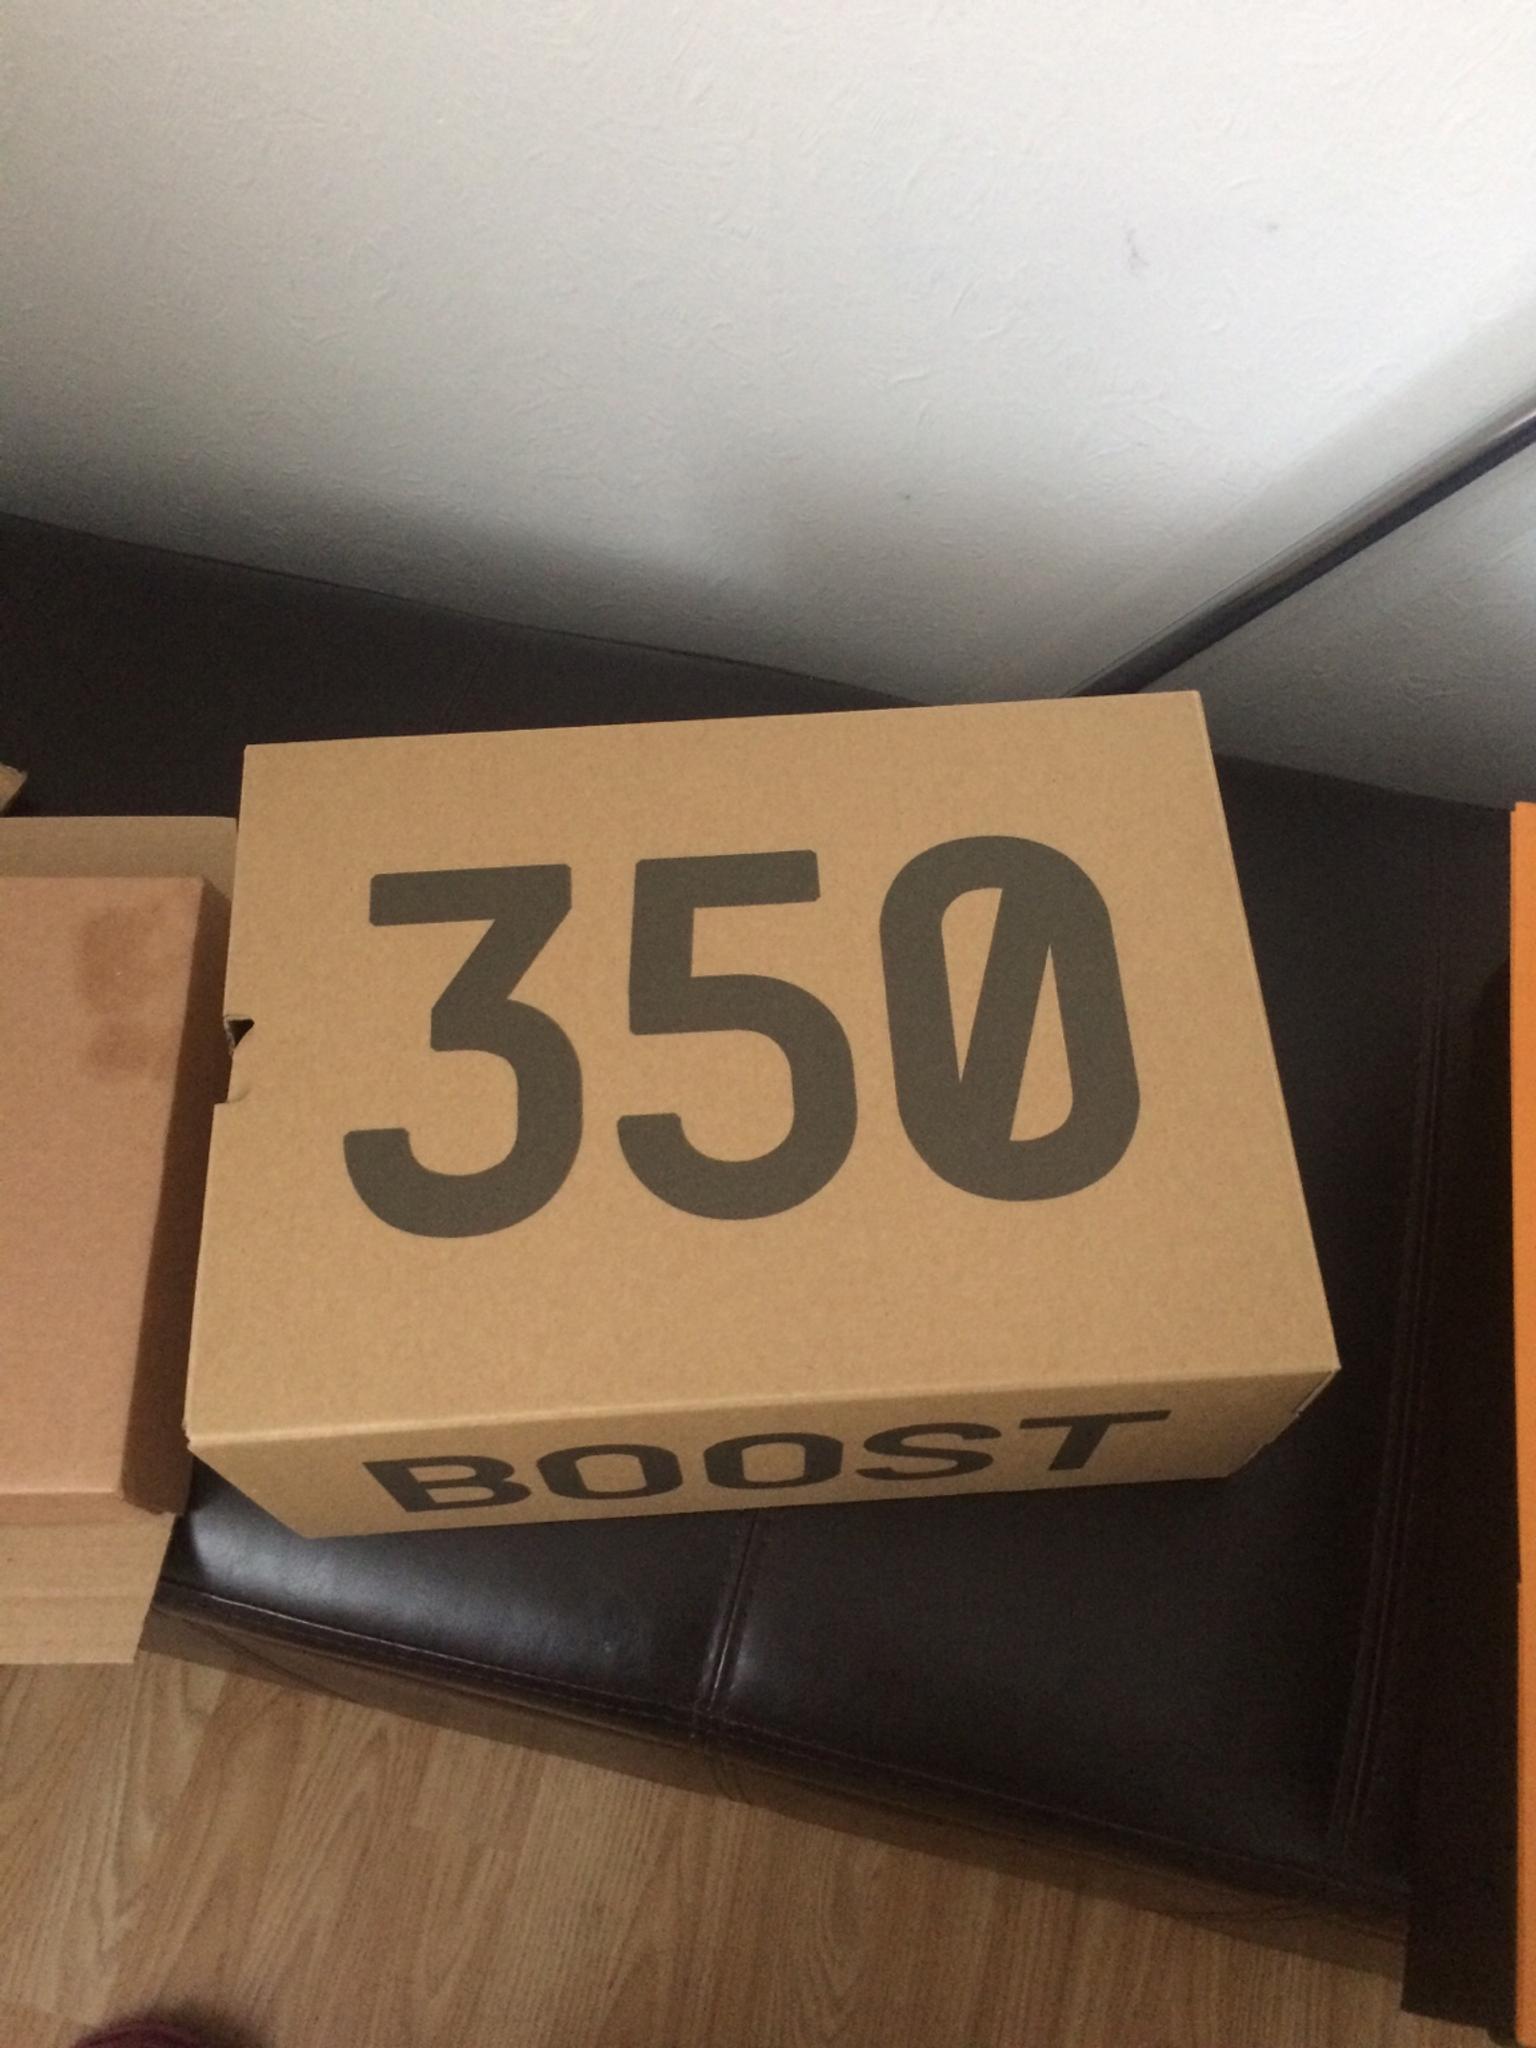 yeezys 350 box